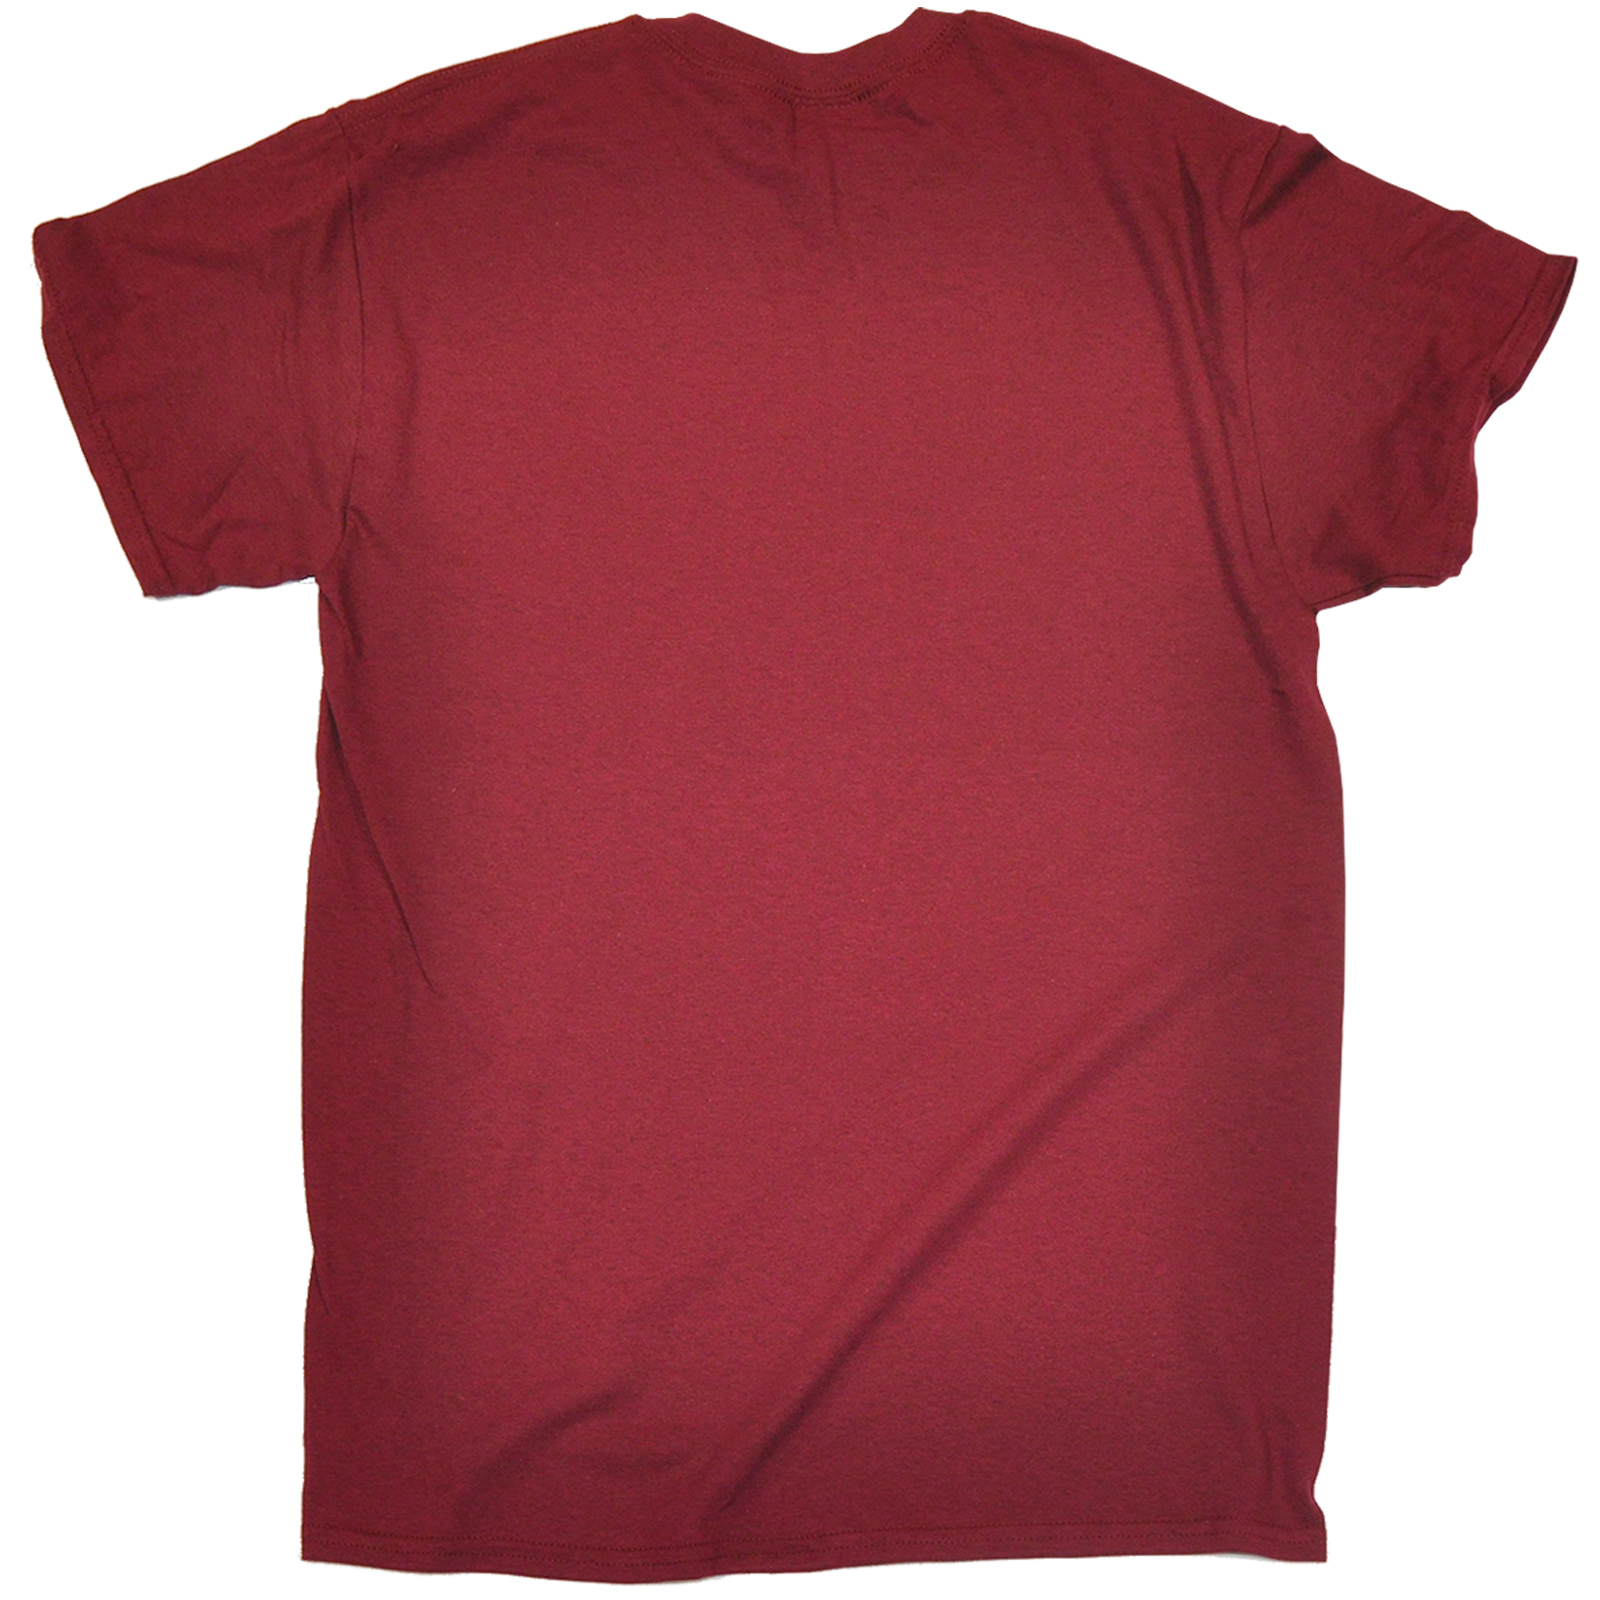 Lifeguard Red Funny Novelty T-Shirt Mens tee TShirt